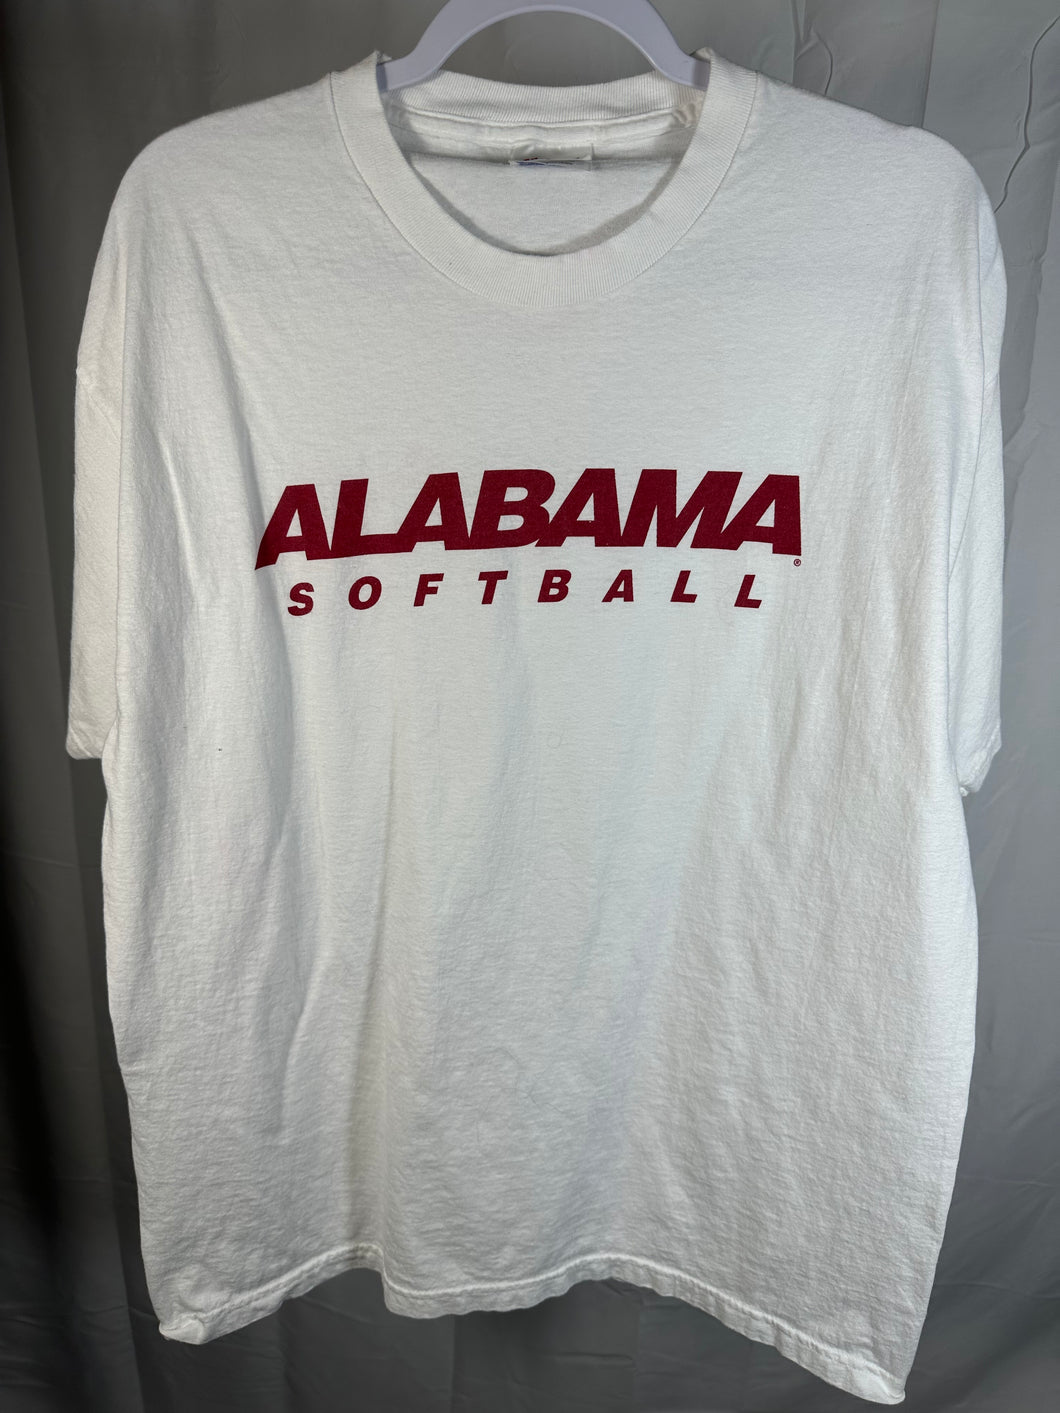 Vintage Alabama Softball White T-Shirt Large